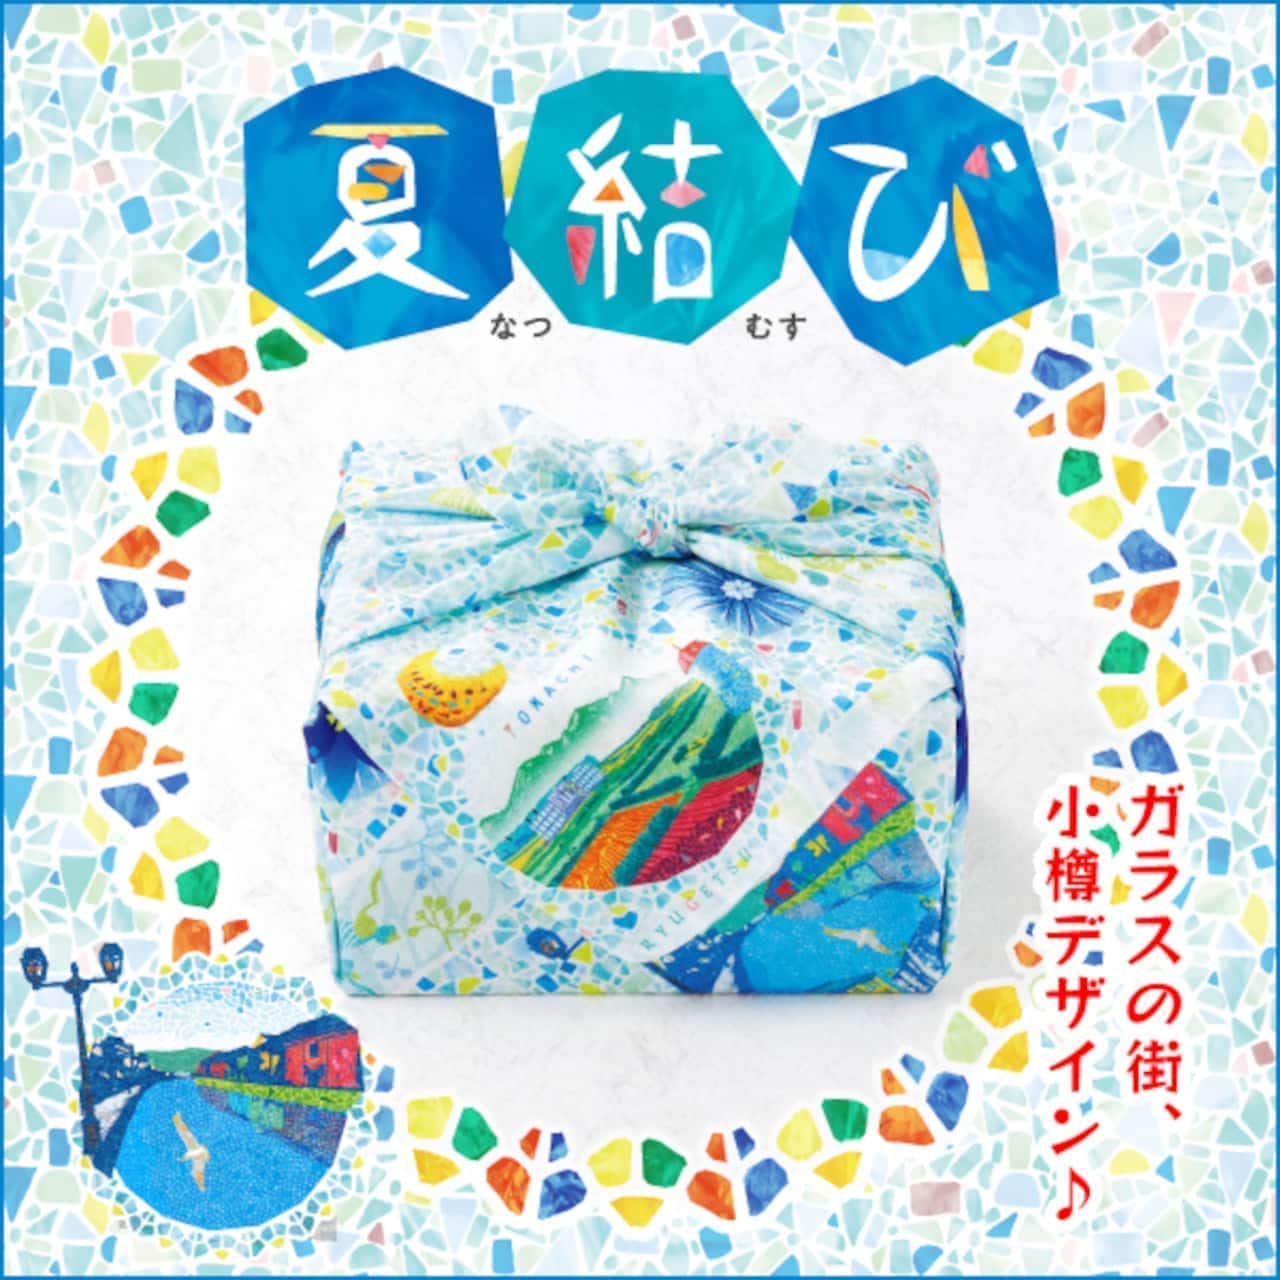 Yanagizuki "Summer Knot" "Otarte" "Otaru Glass Jelly" "Anbata-san 